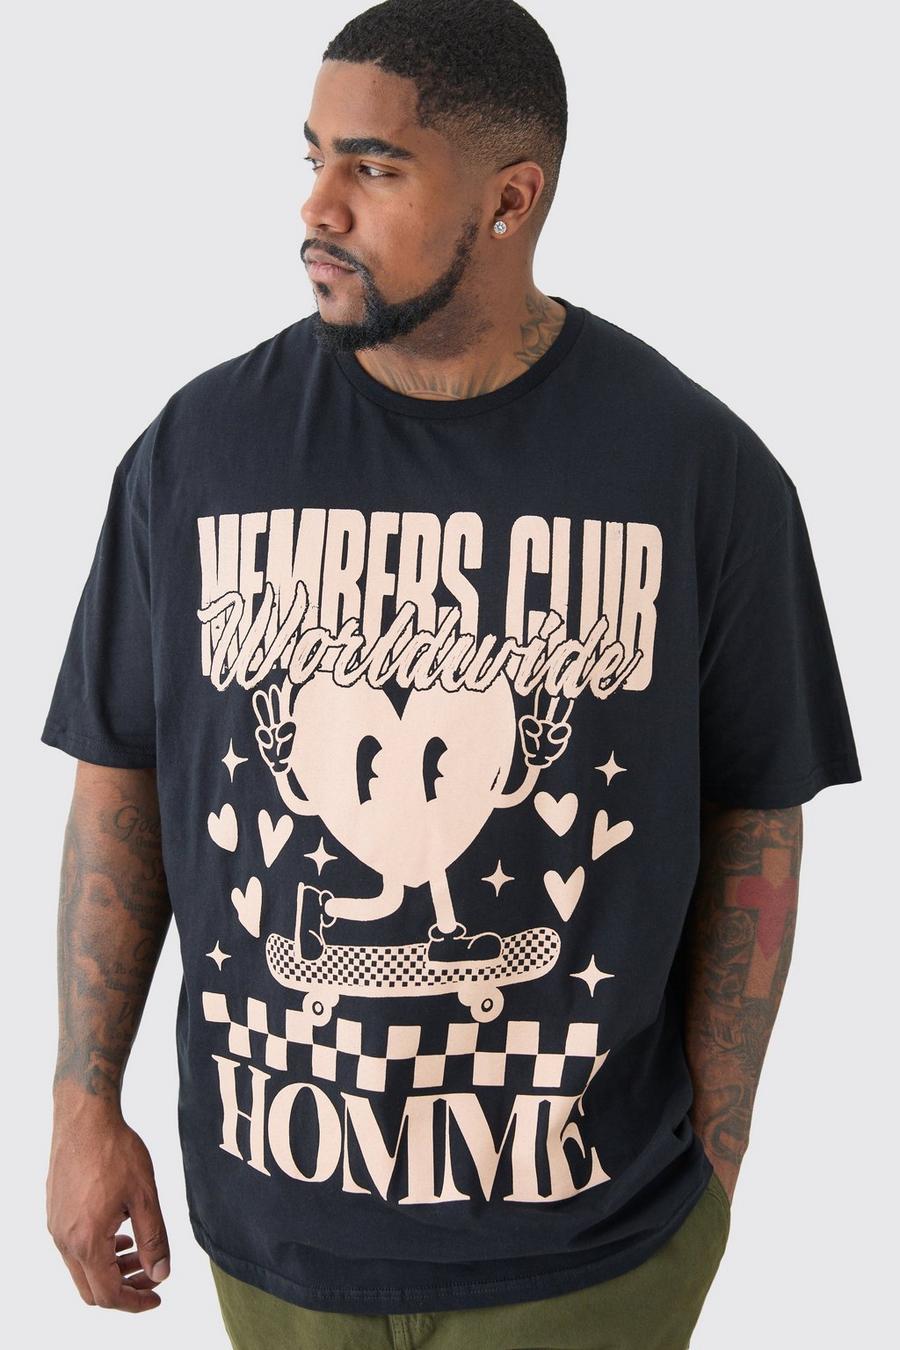 Plus schwarzes T-Shirt mit Members Club Worldwide Print, Black